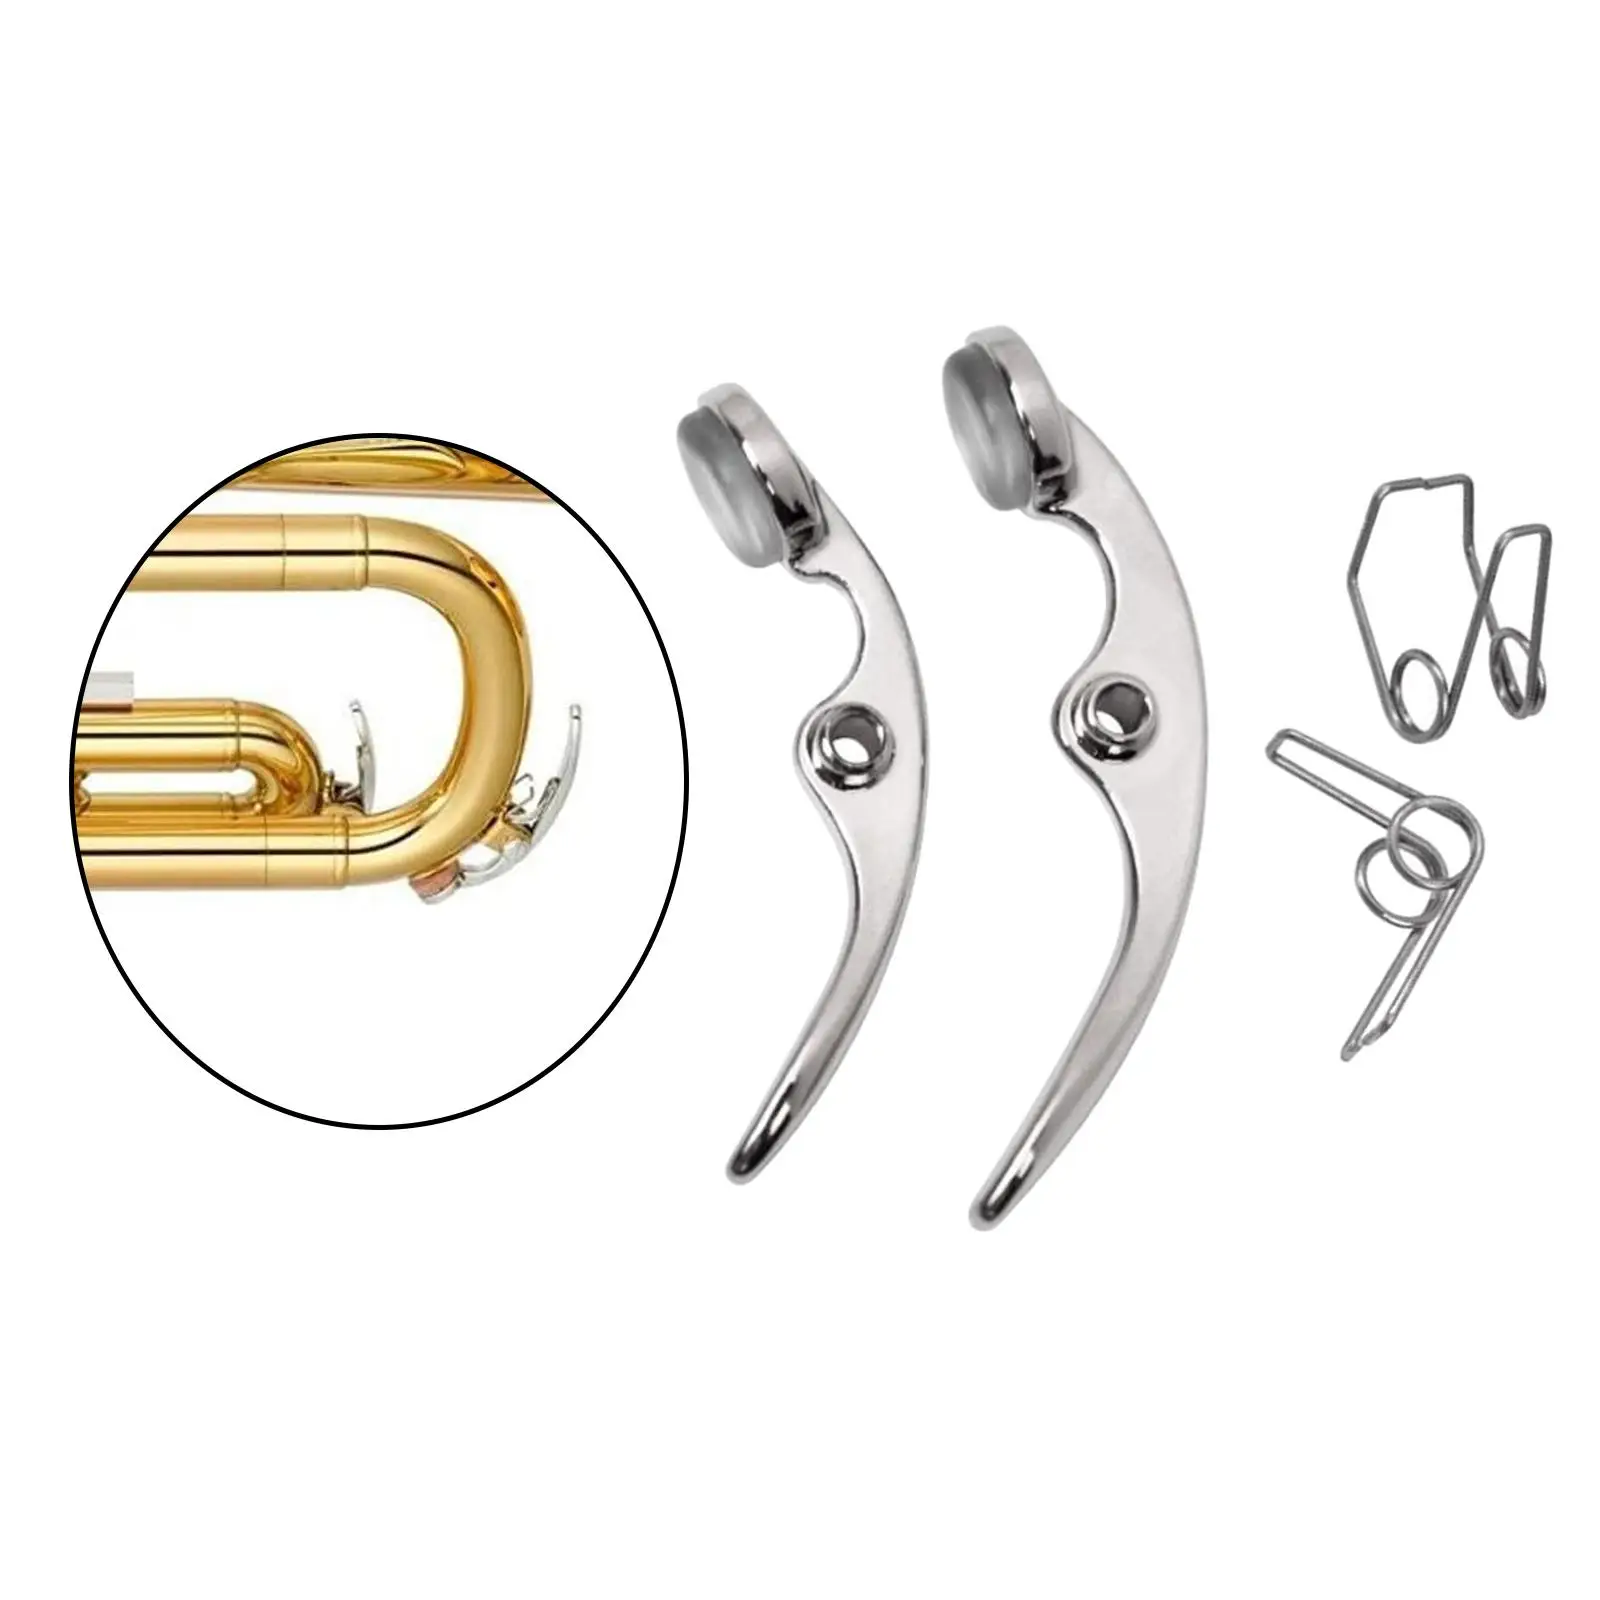 Trumpet Spit Valve Professional Water Value Valve Repair Kits for Wind Instrument Brass Instrument Trombone Trumpet Repairing